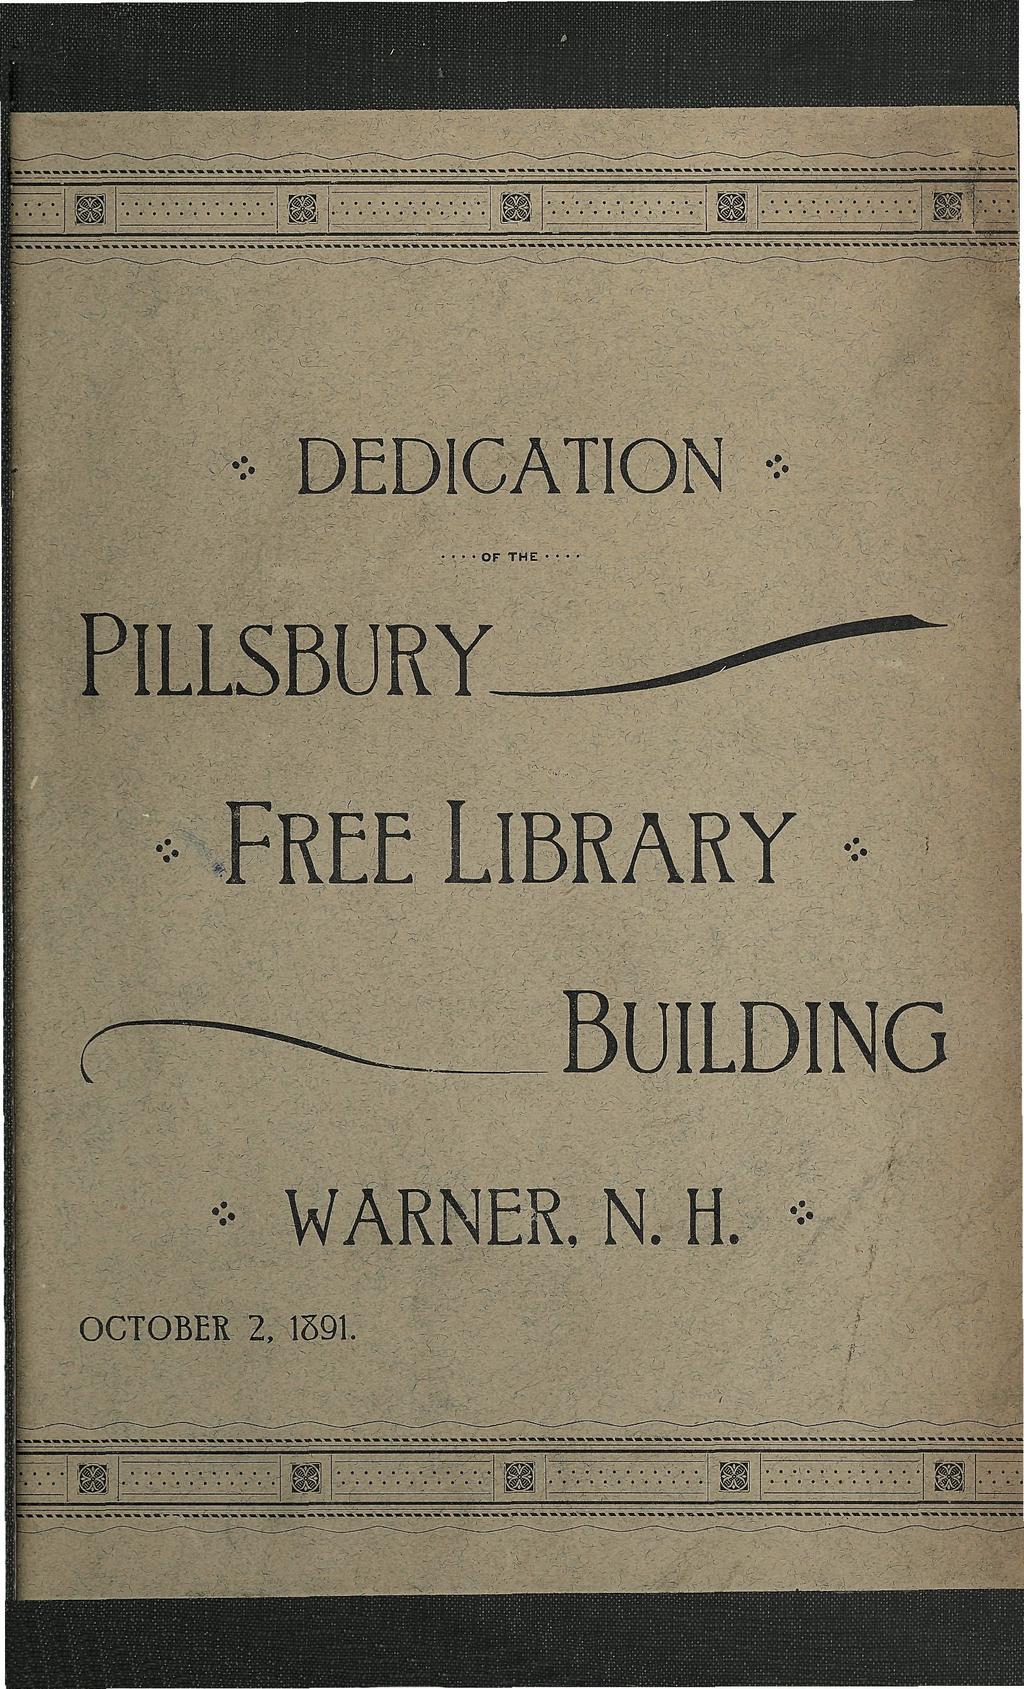 DEDICATION OF THE PILLSBURY FREE LIBRARY